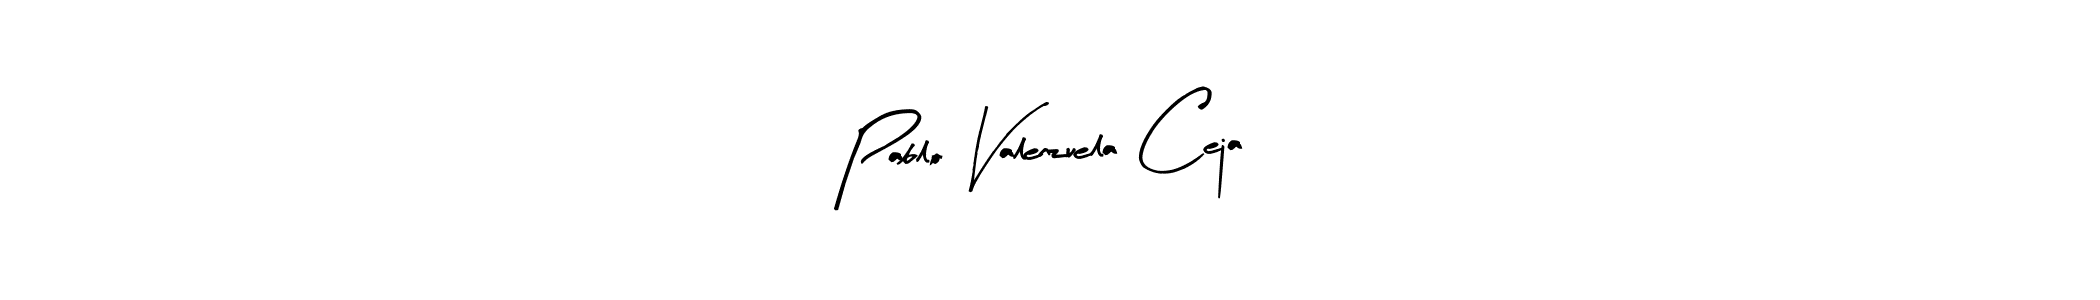 How to Draw Pablo Valenzuela Ceja signature style? Arty Signature is a latest design signature styles for name Pablo Valenzuela Ceja. Pablo Valenzuela Ceja signature style 8 images and pictures png